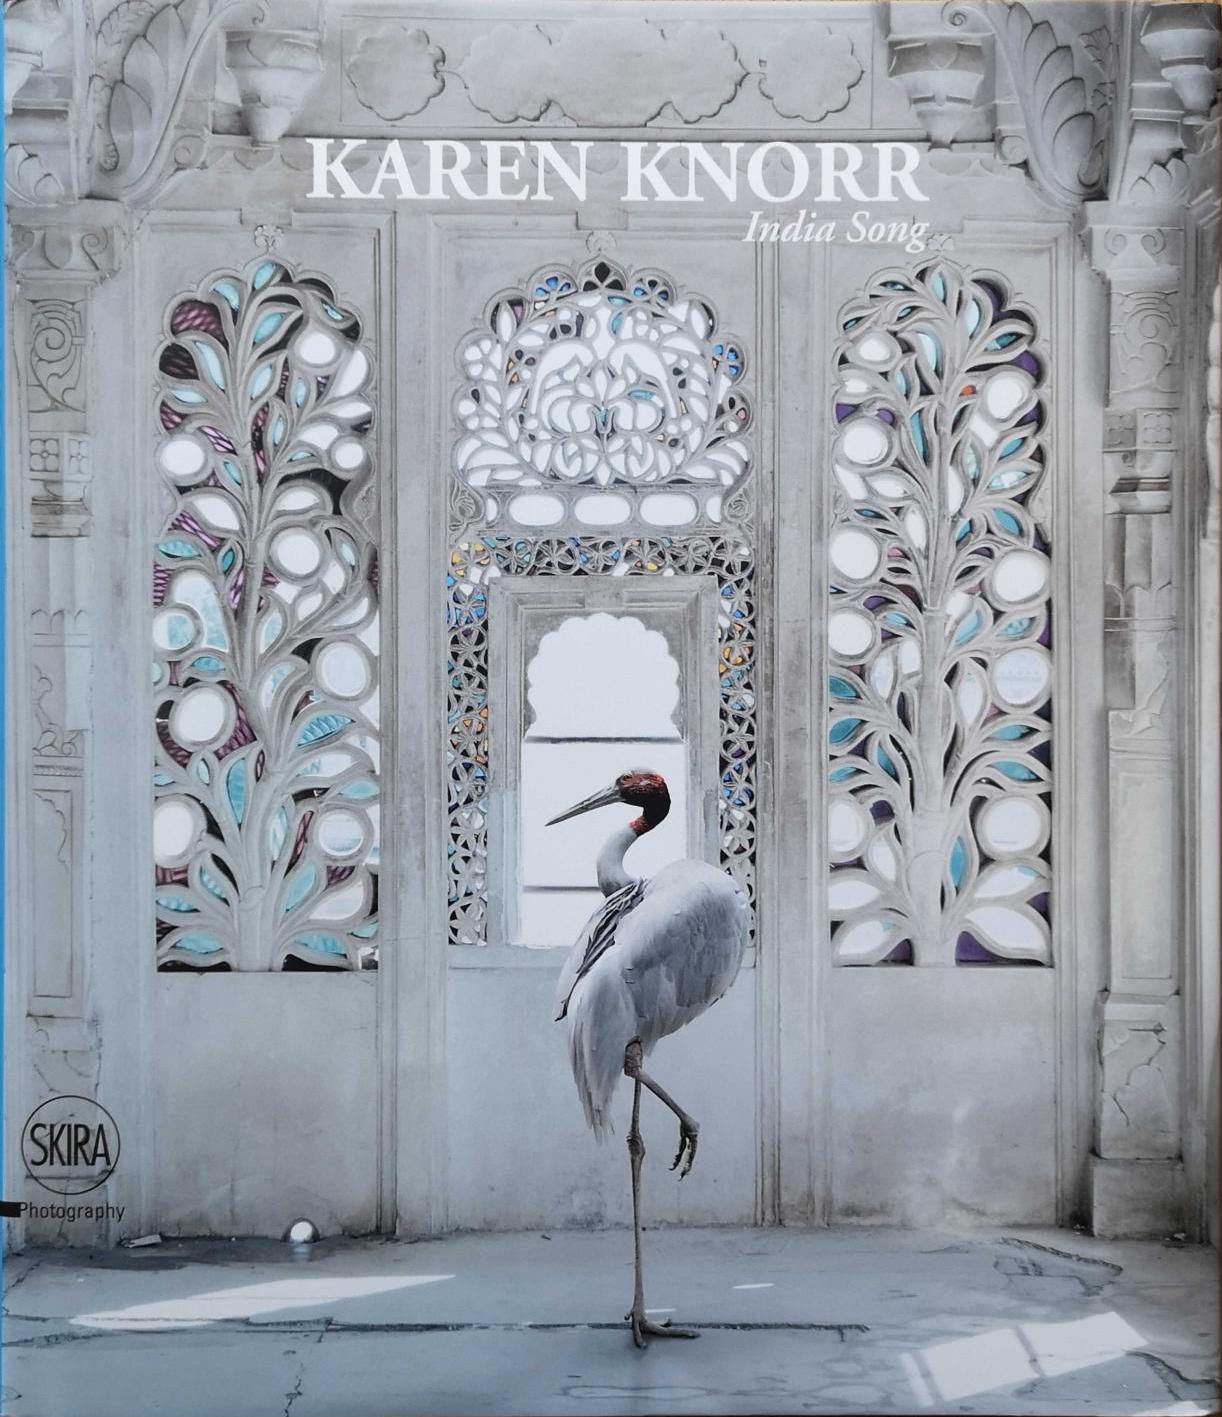 India Song, Karen Knorr